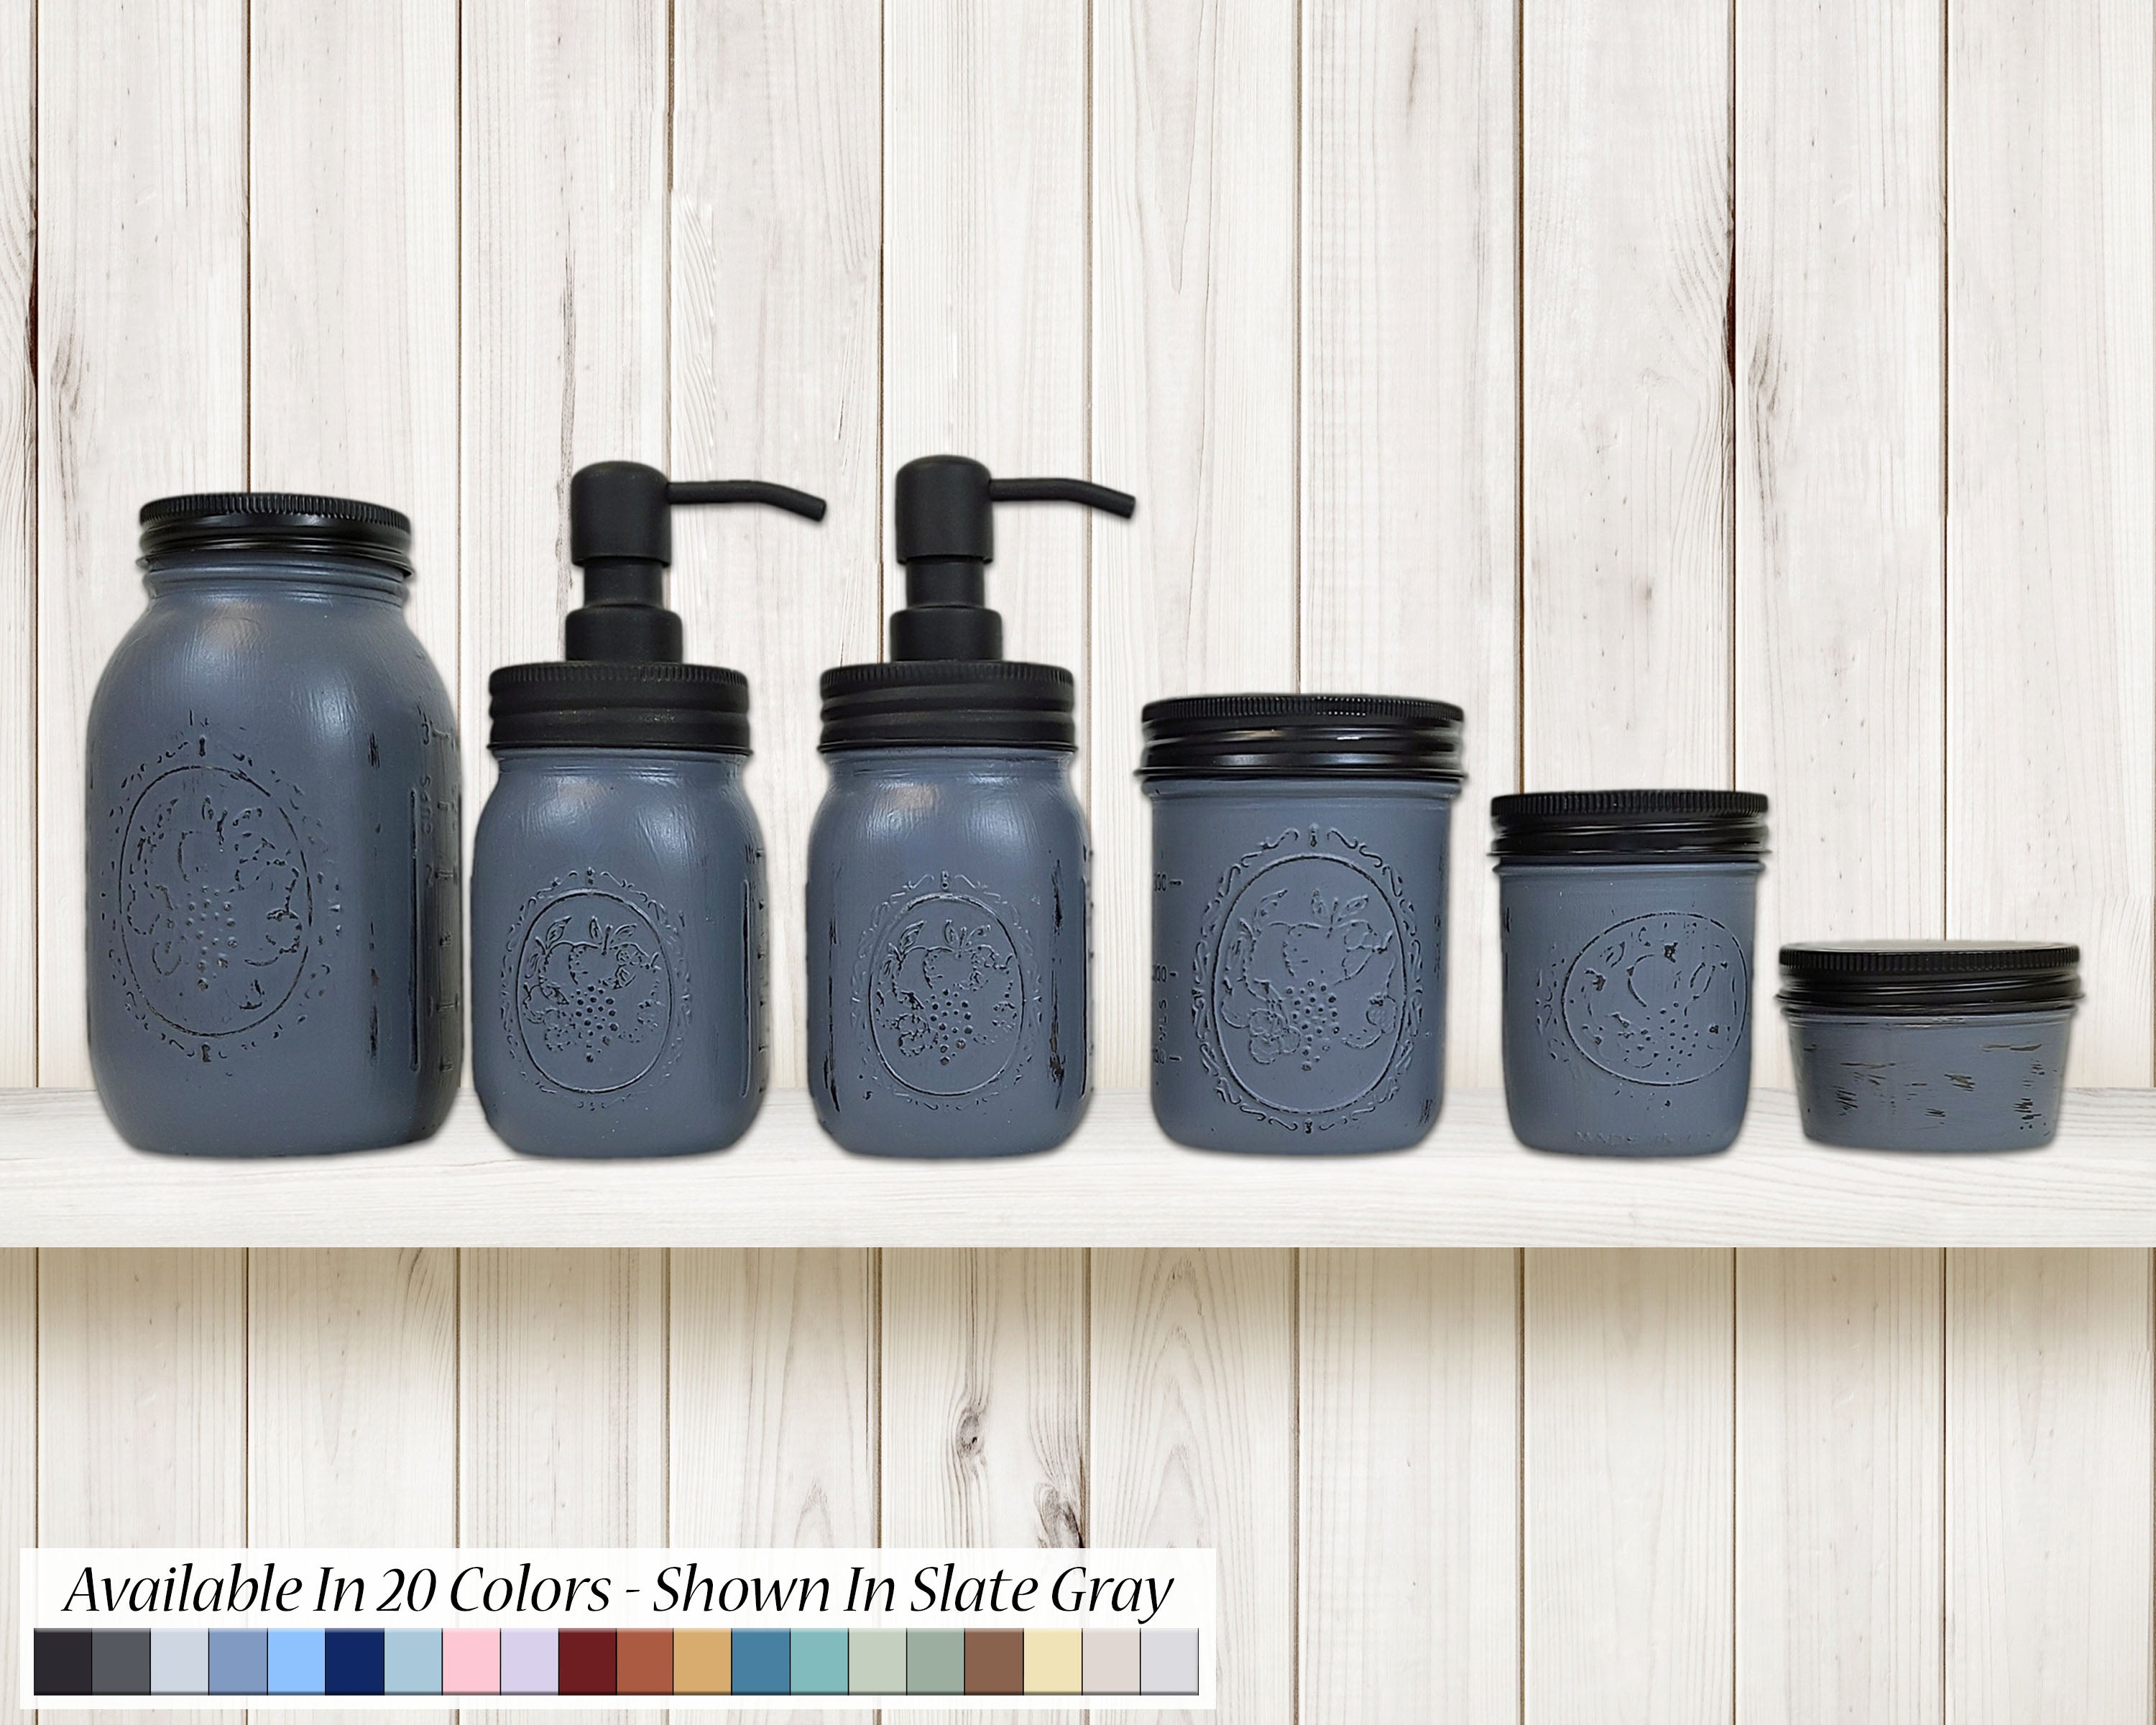 Custom Painted Mason Jar Bathroom Set, 20 Paint Colors, Shown in Slate Gray with Black Lids